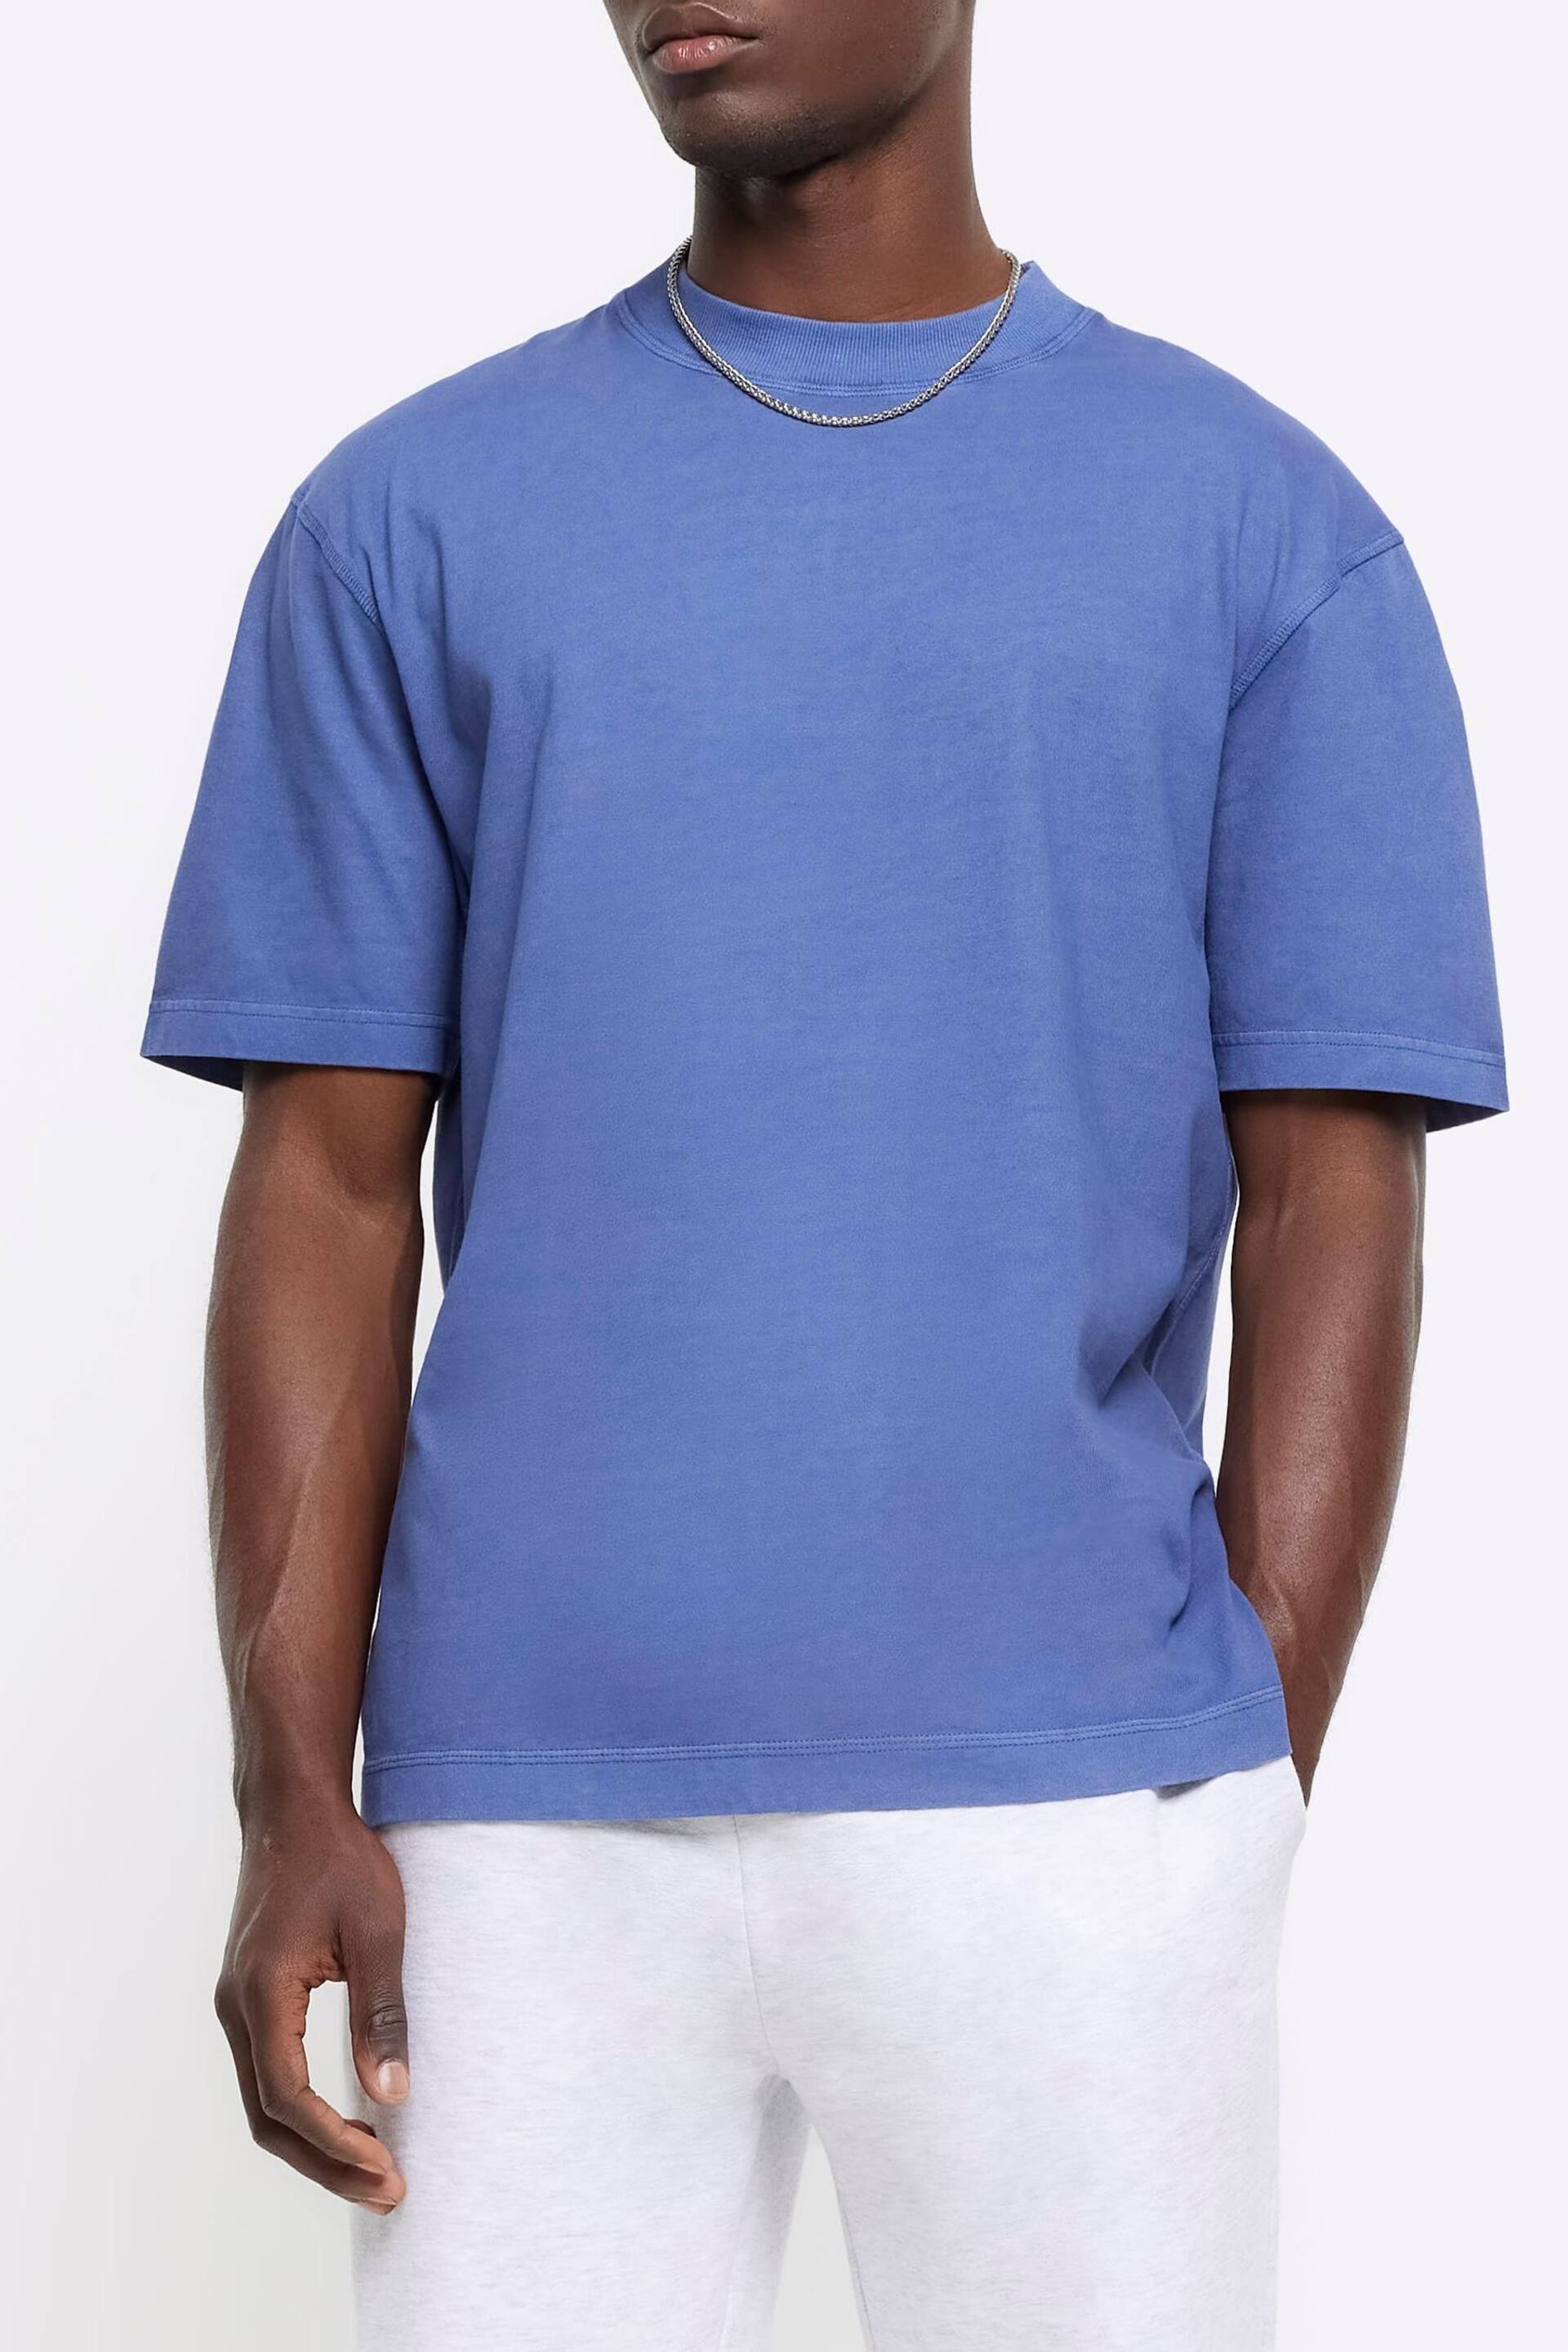 River Island Blue Studio Washed Regular Fit T-Shirt - Image 1 of 4